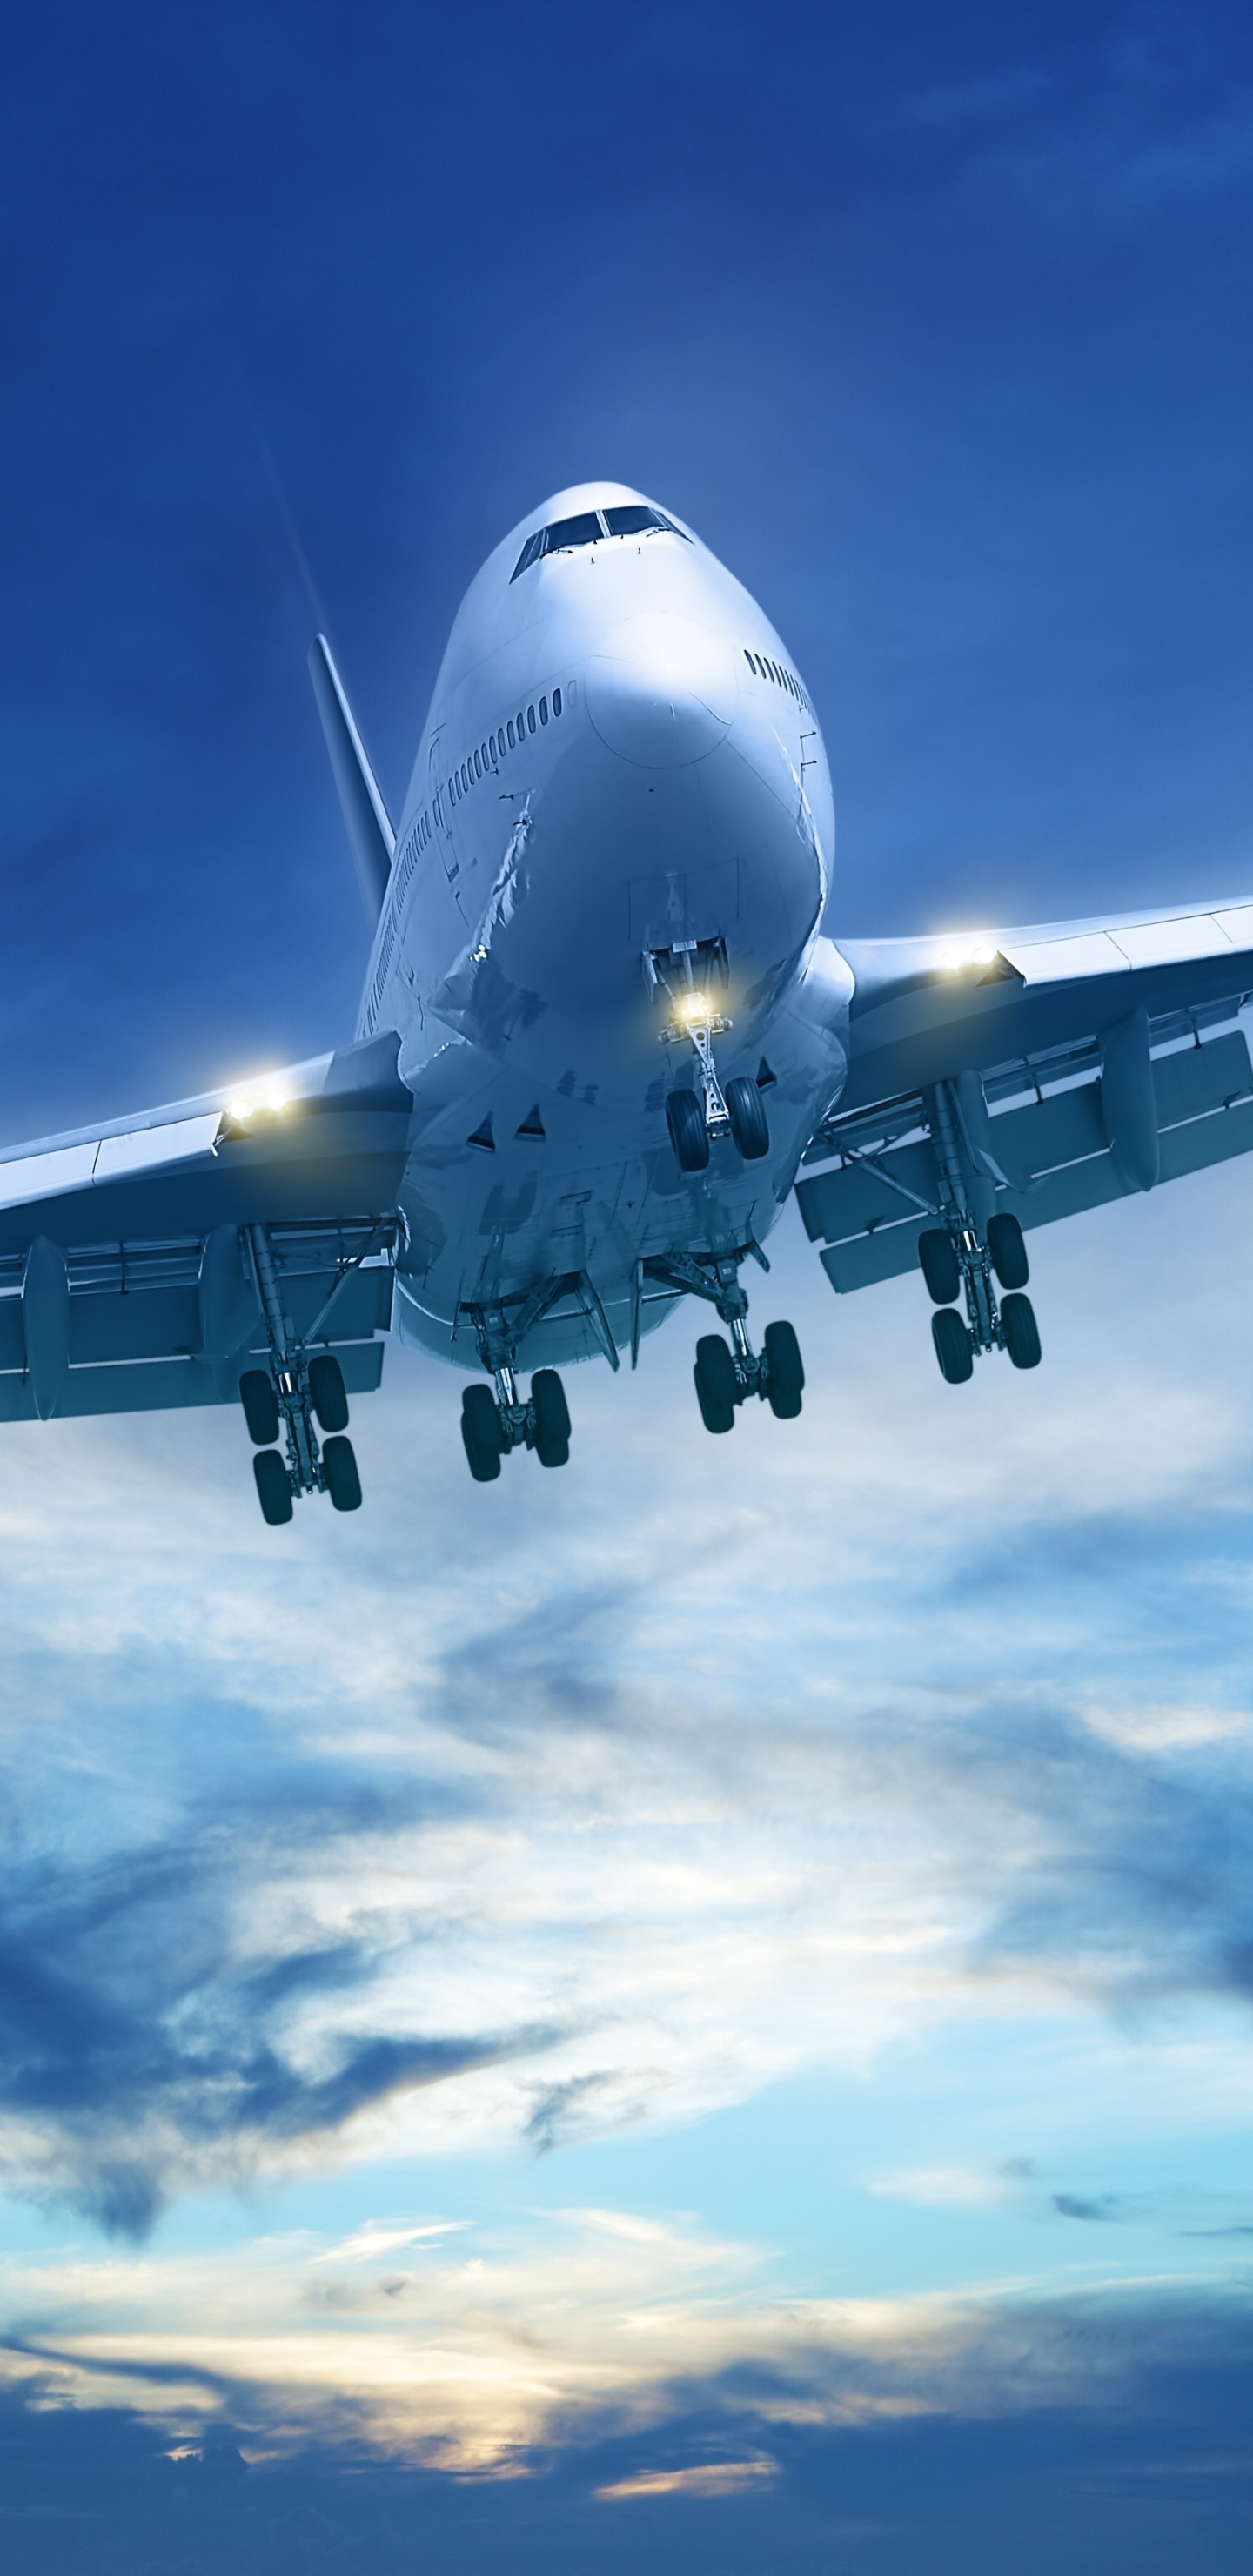 White Airplane Under Blue Sky During Daytime. Wallpaper in 1440x2960 Resolution